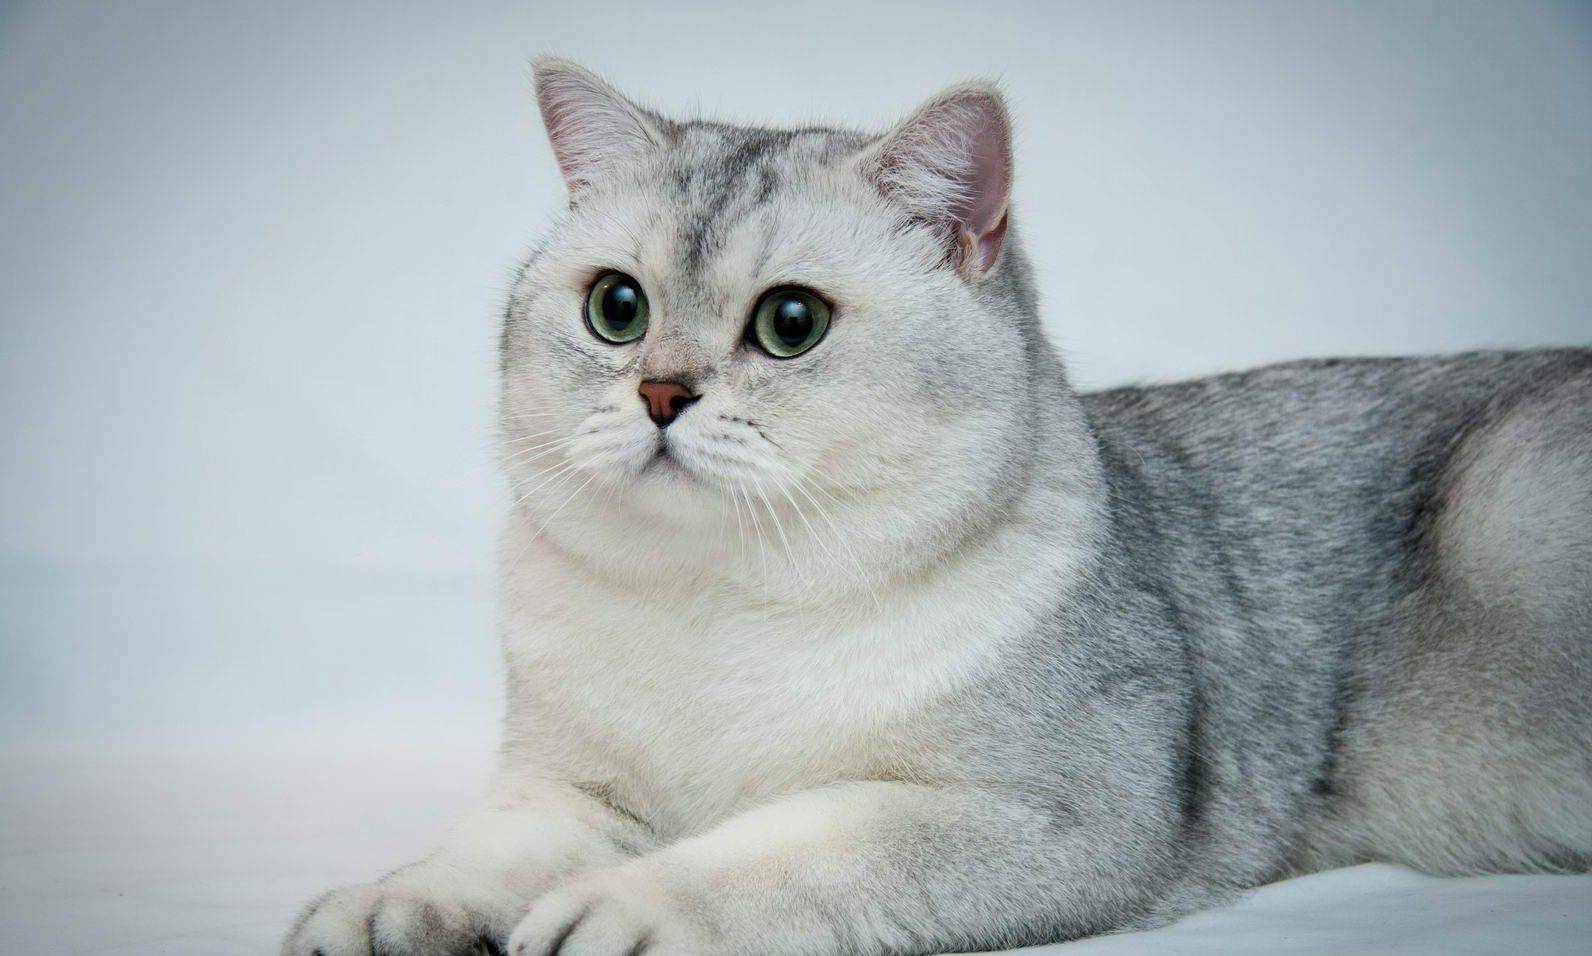 Характеристика породы кошки серебристая шиншилла